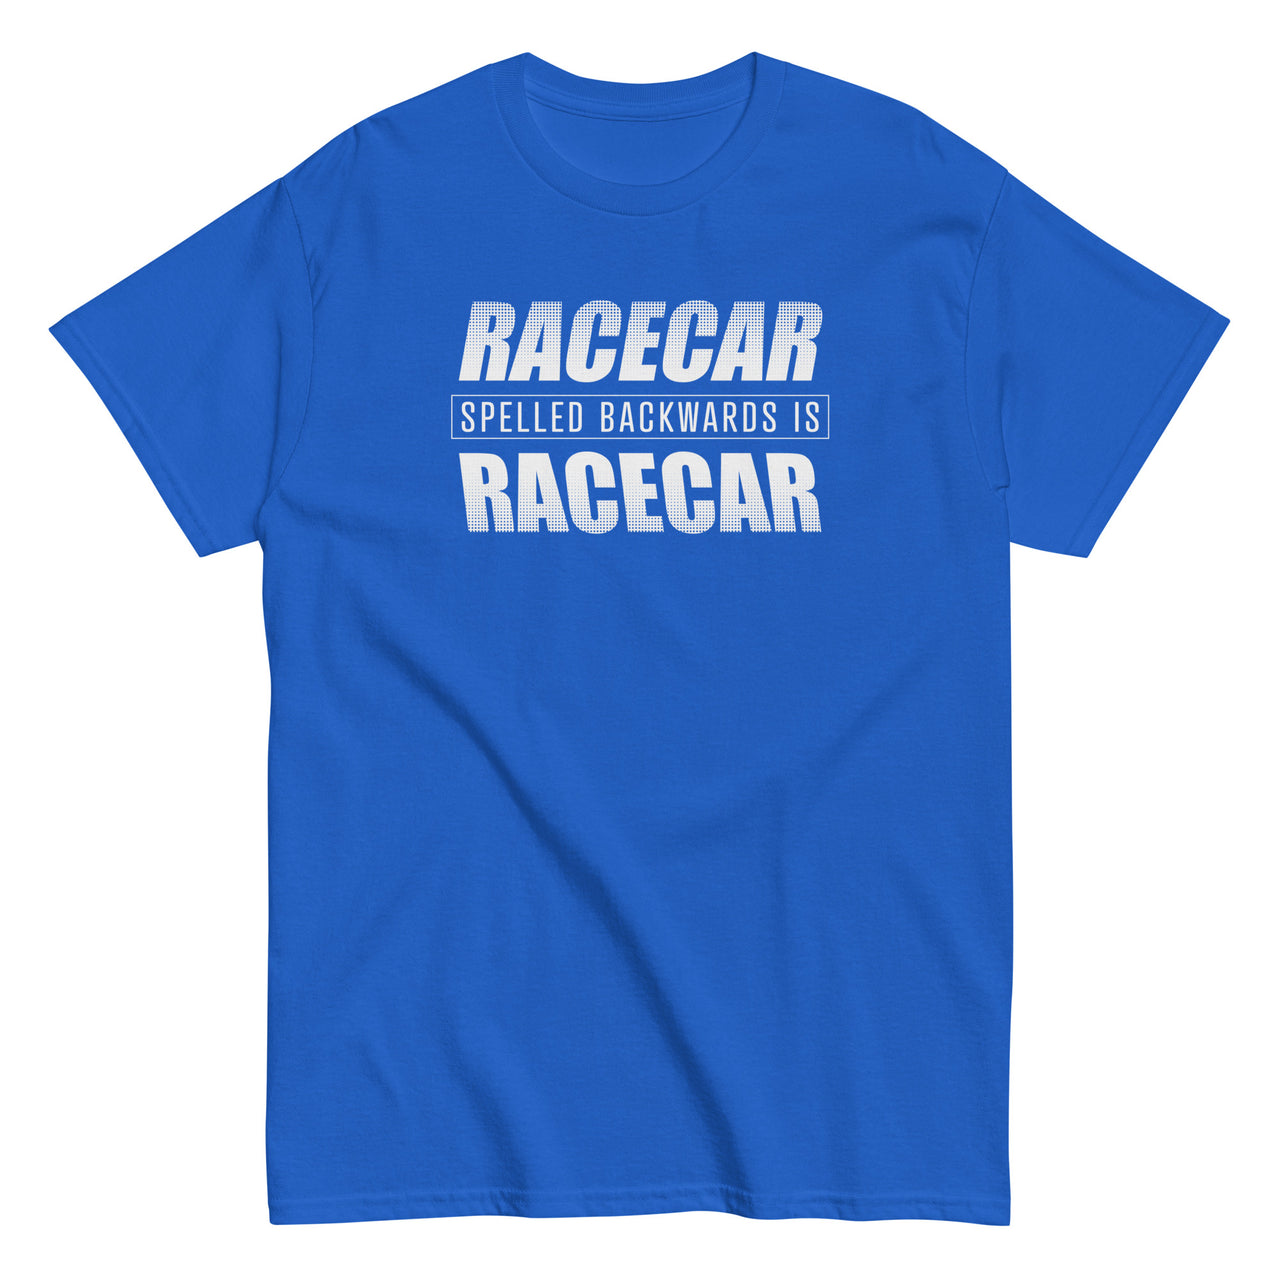 Funny Racecar Shirt, Car Enthusiast Gift, Drag Racing, or Racecar T-Shirt in blue